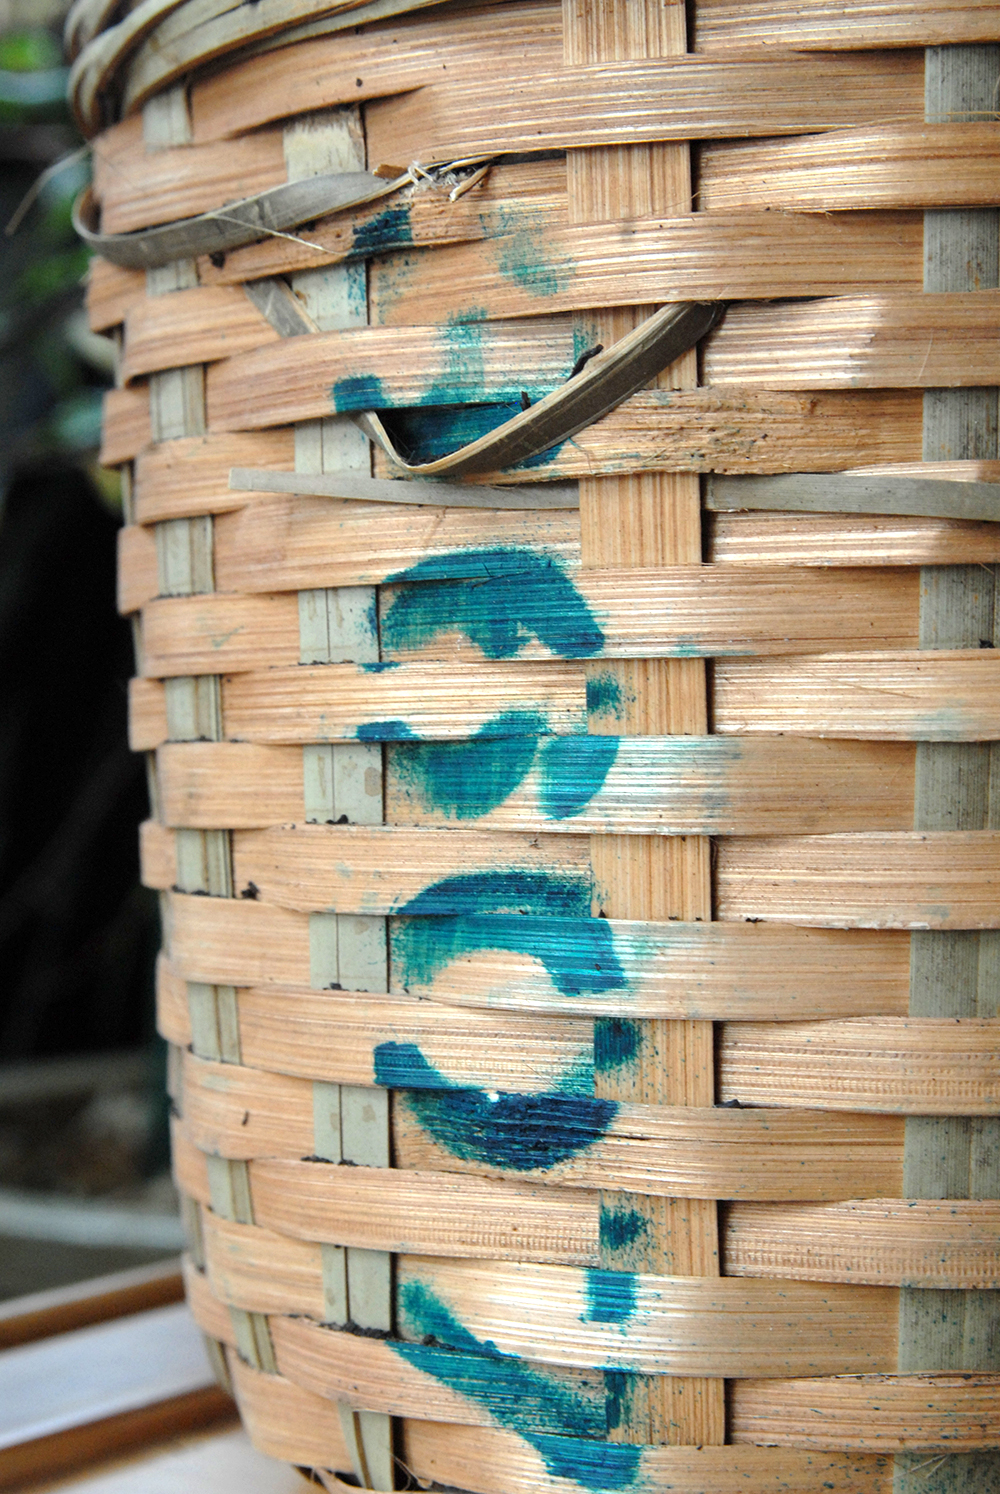 2005 Liu Bao tea in Bamboo Basket   3607 